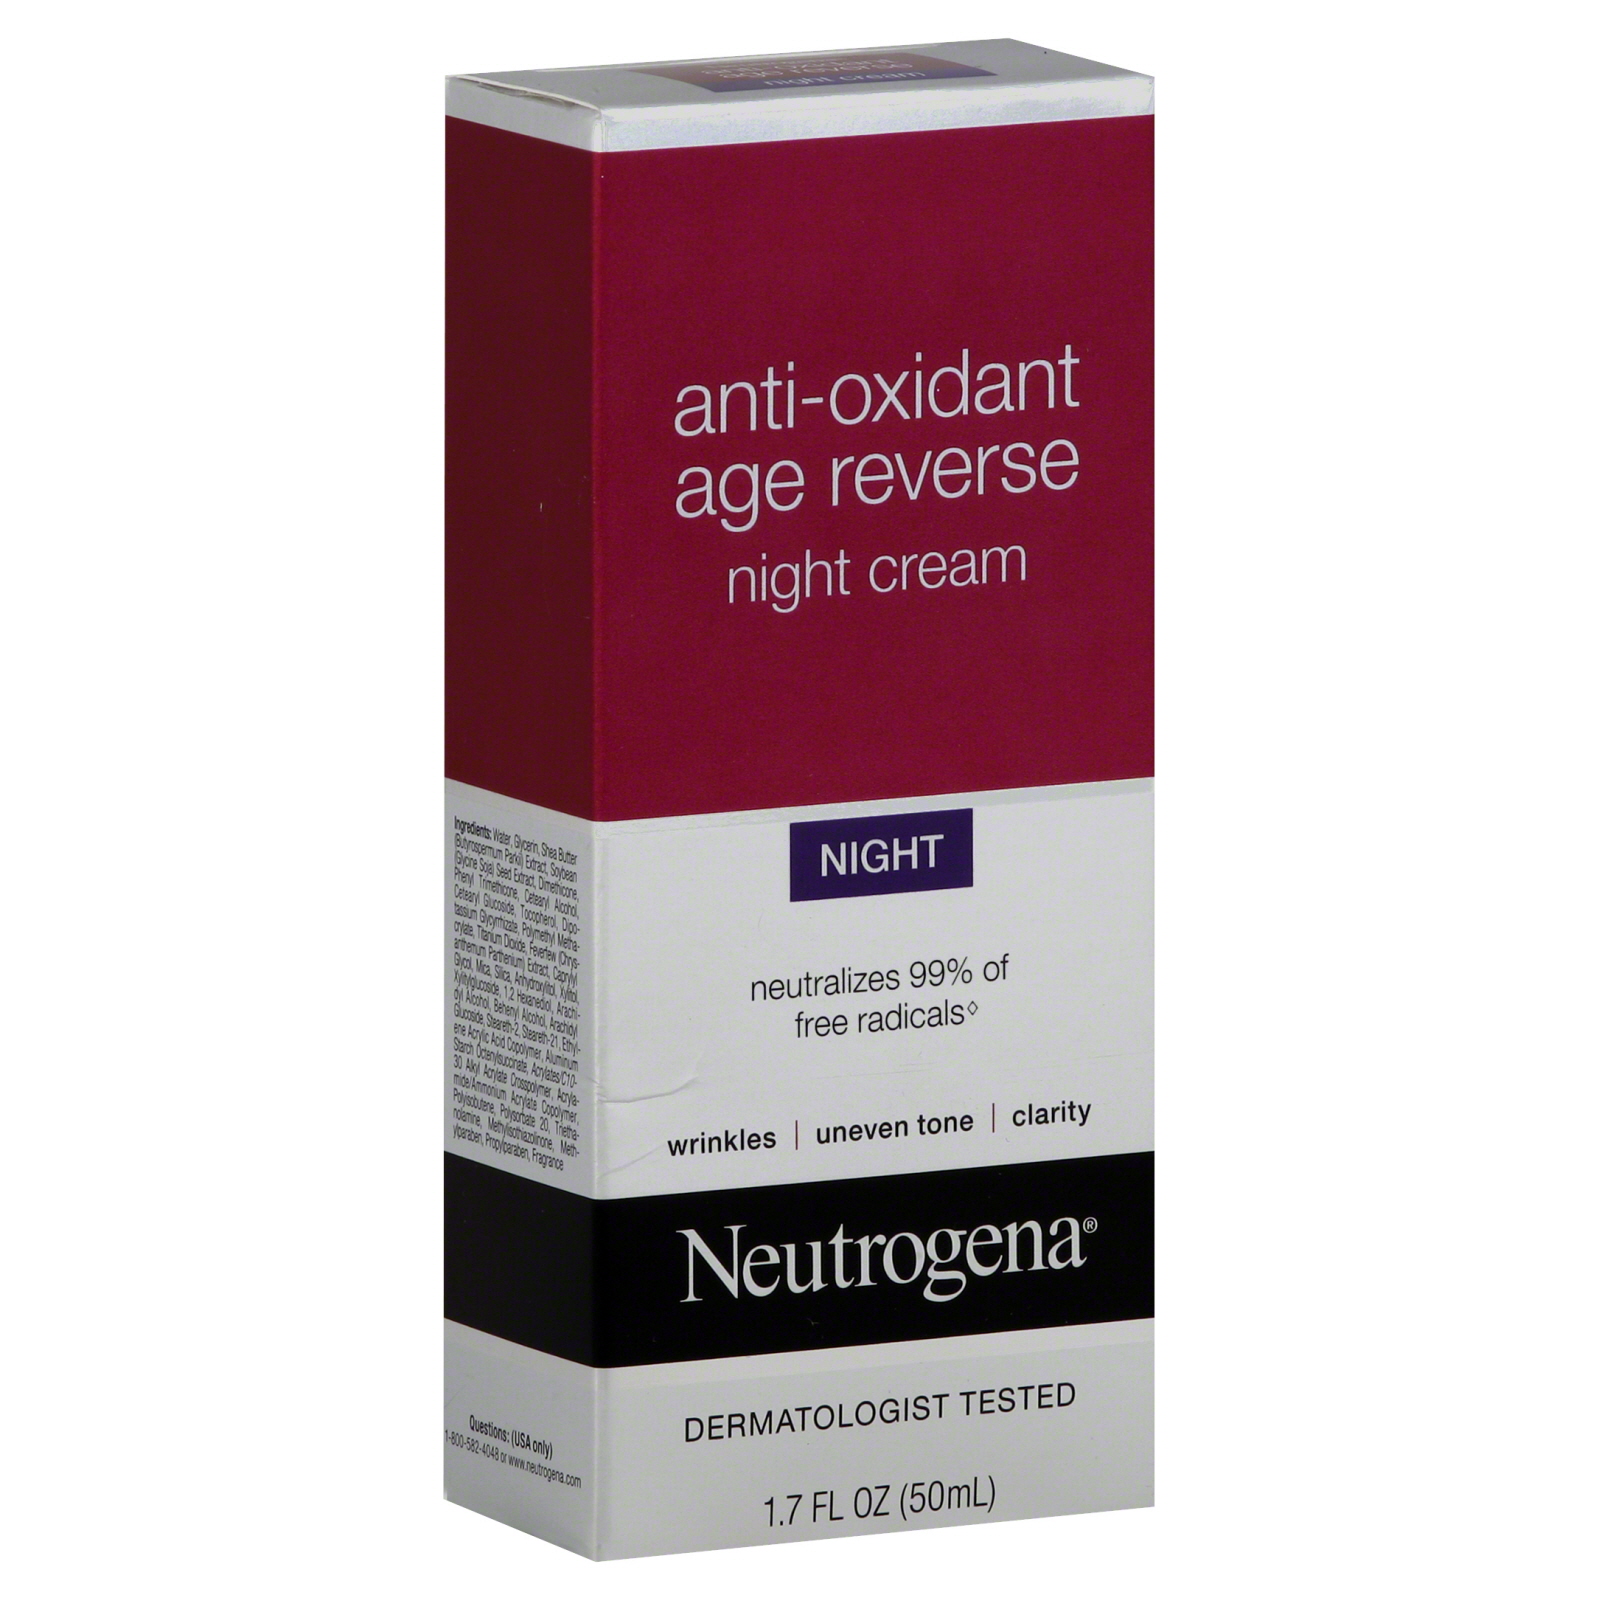 Neutrogena Night Cream, Anti-Oxidant Age Reverse, 1.7 fl oz (50 ml)